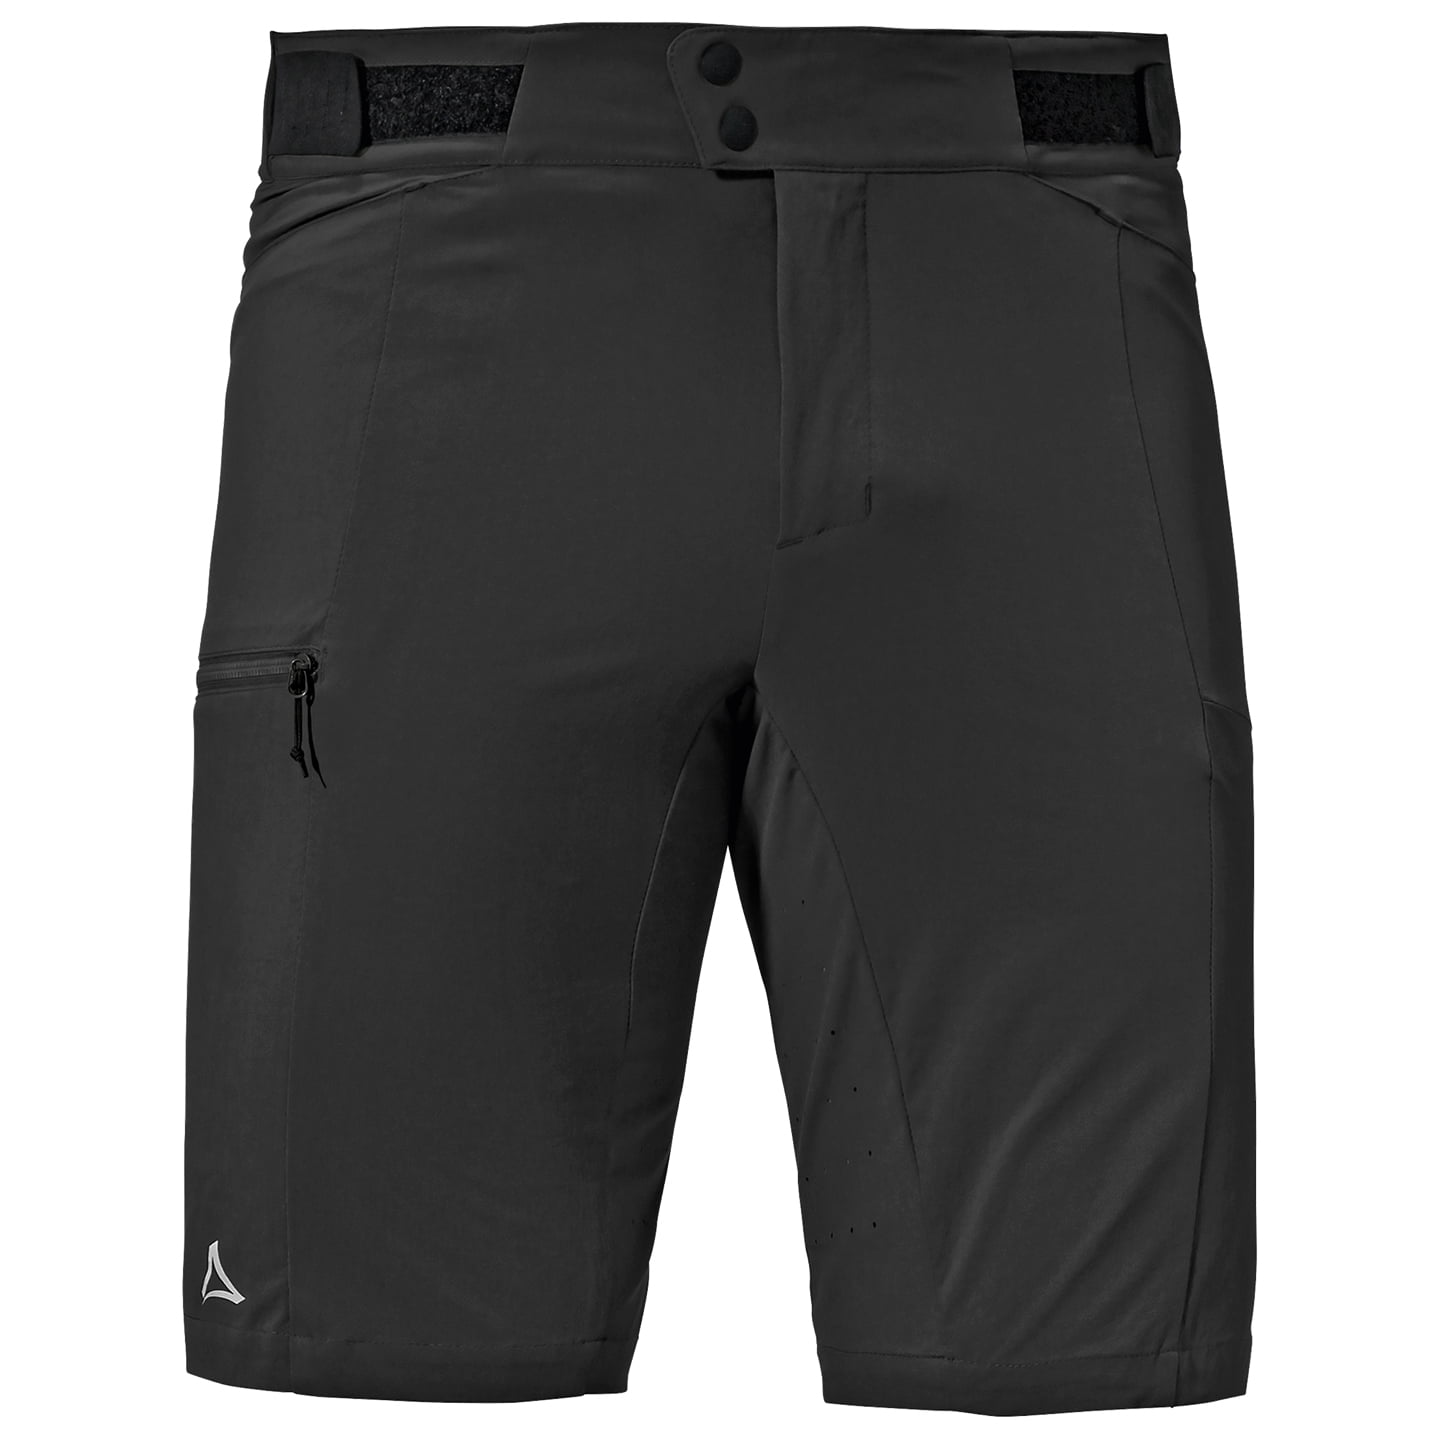 SCHOFFEL Montosoli w/o Pad Bike Shorts, for men, size 48